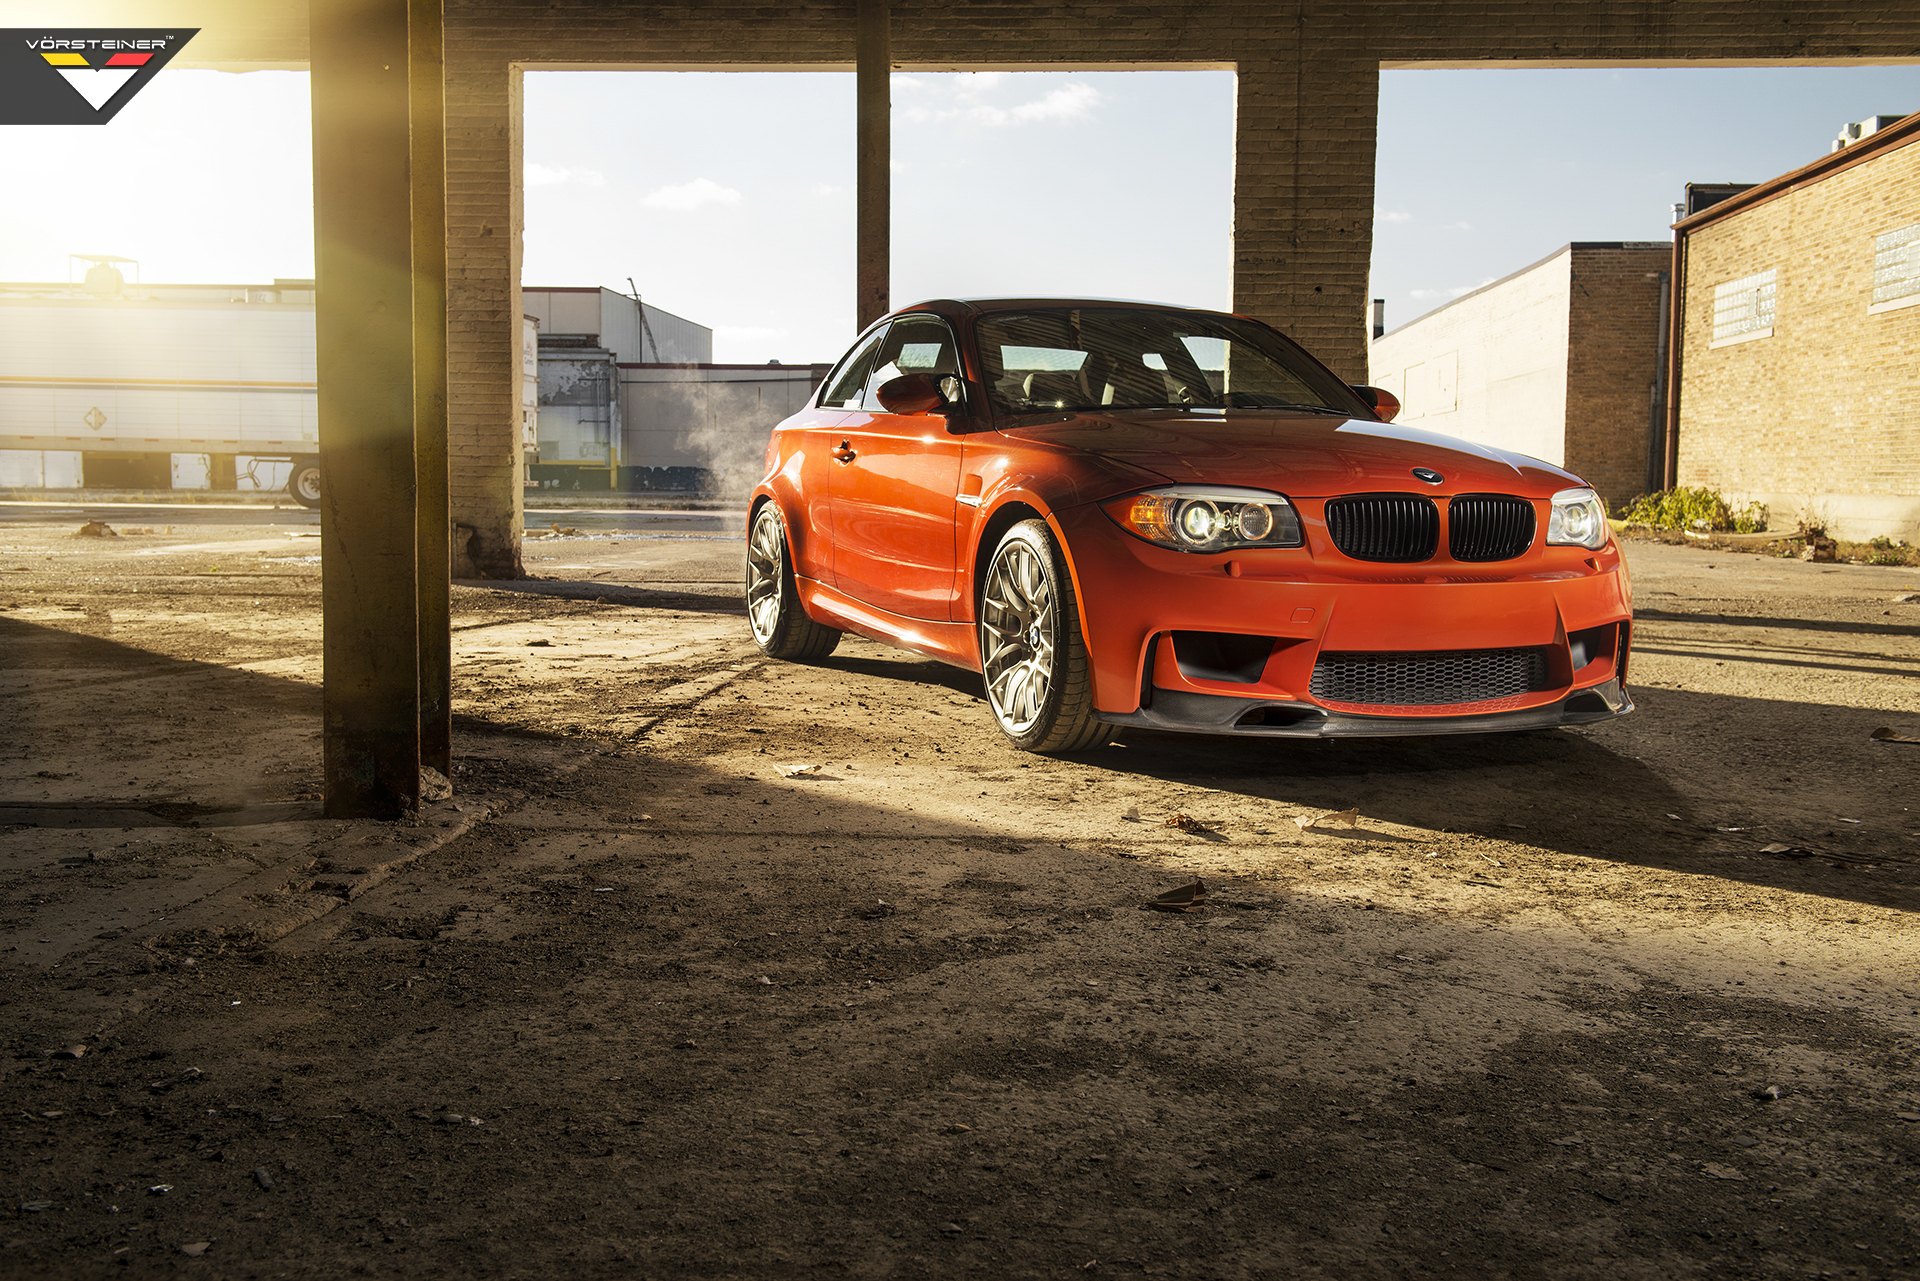 Carbon Fiber Front Lip on Orange BMW 1-Series - Photo by Vorstiner